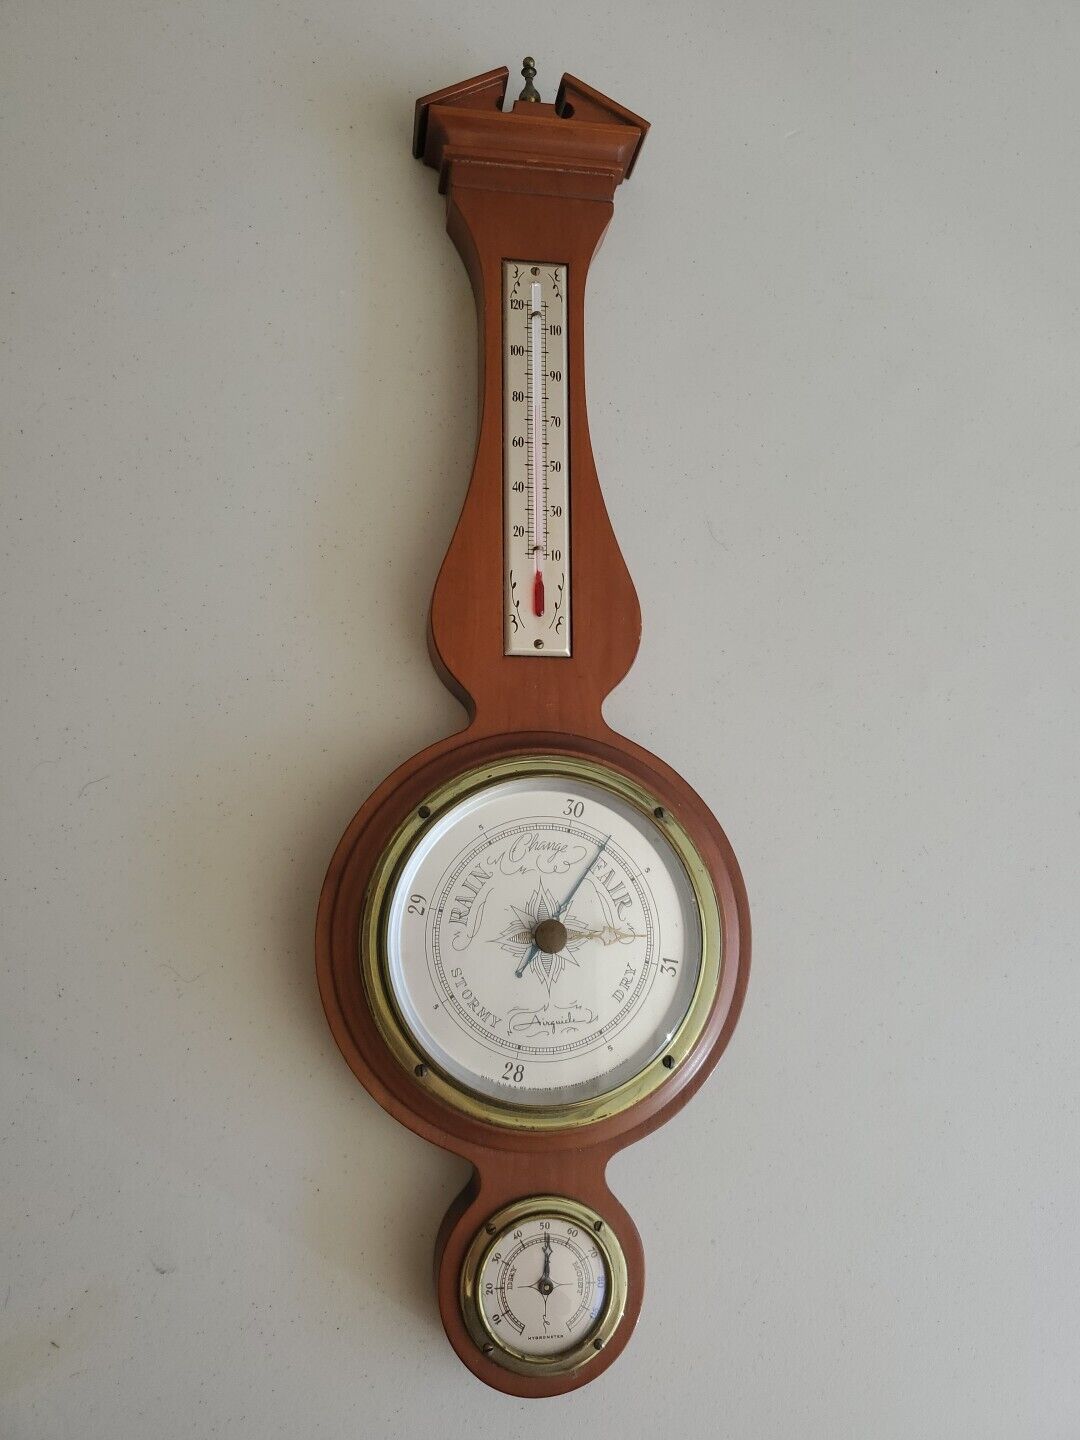 Vintage Airguide Barometer + Temperature + Humidity Gauge 3 Weathure Instruments